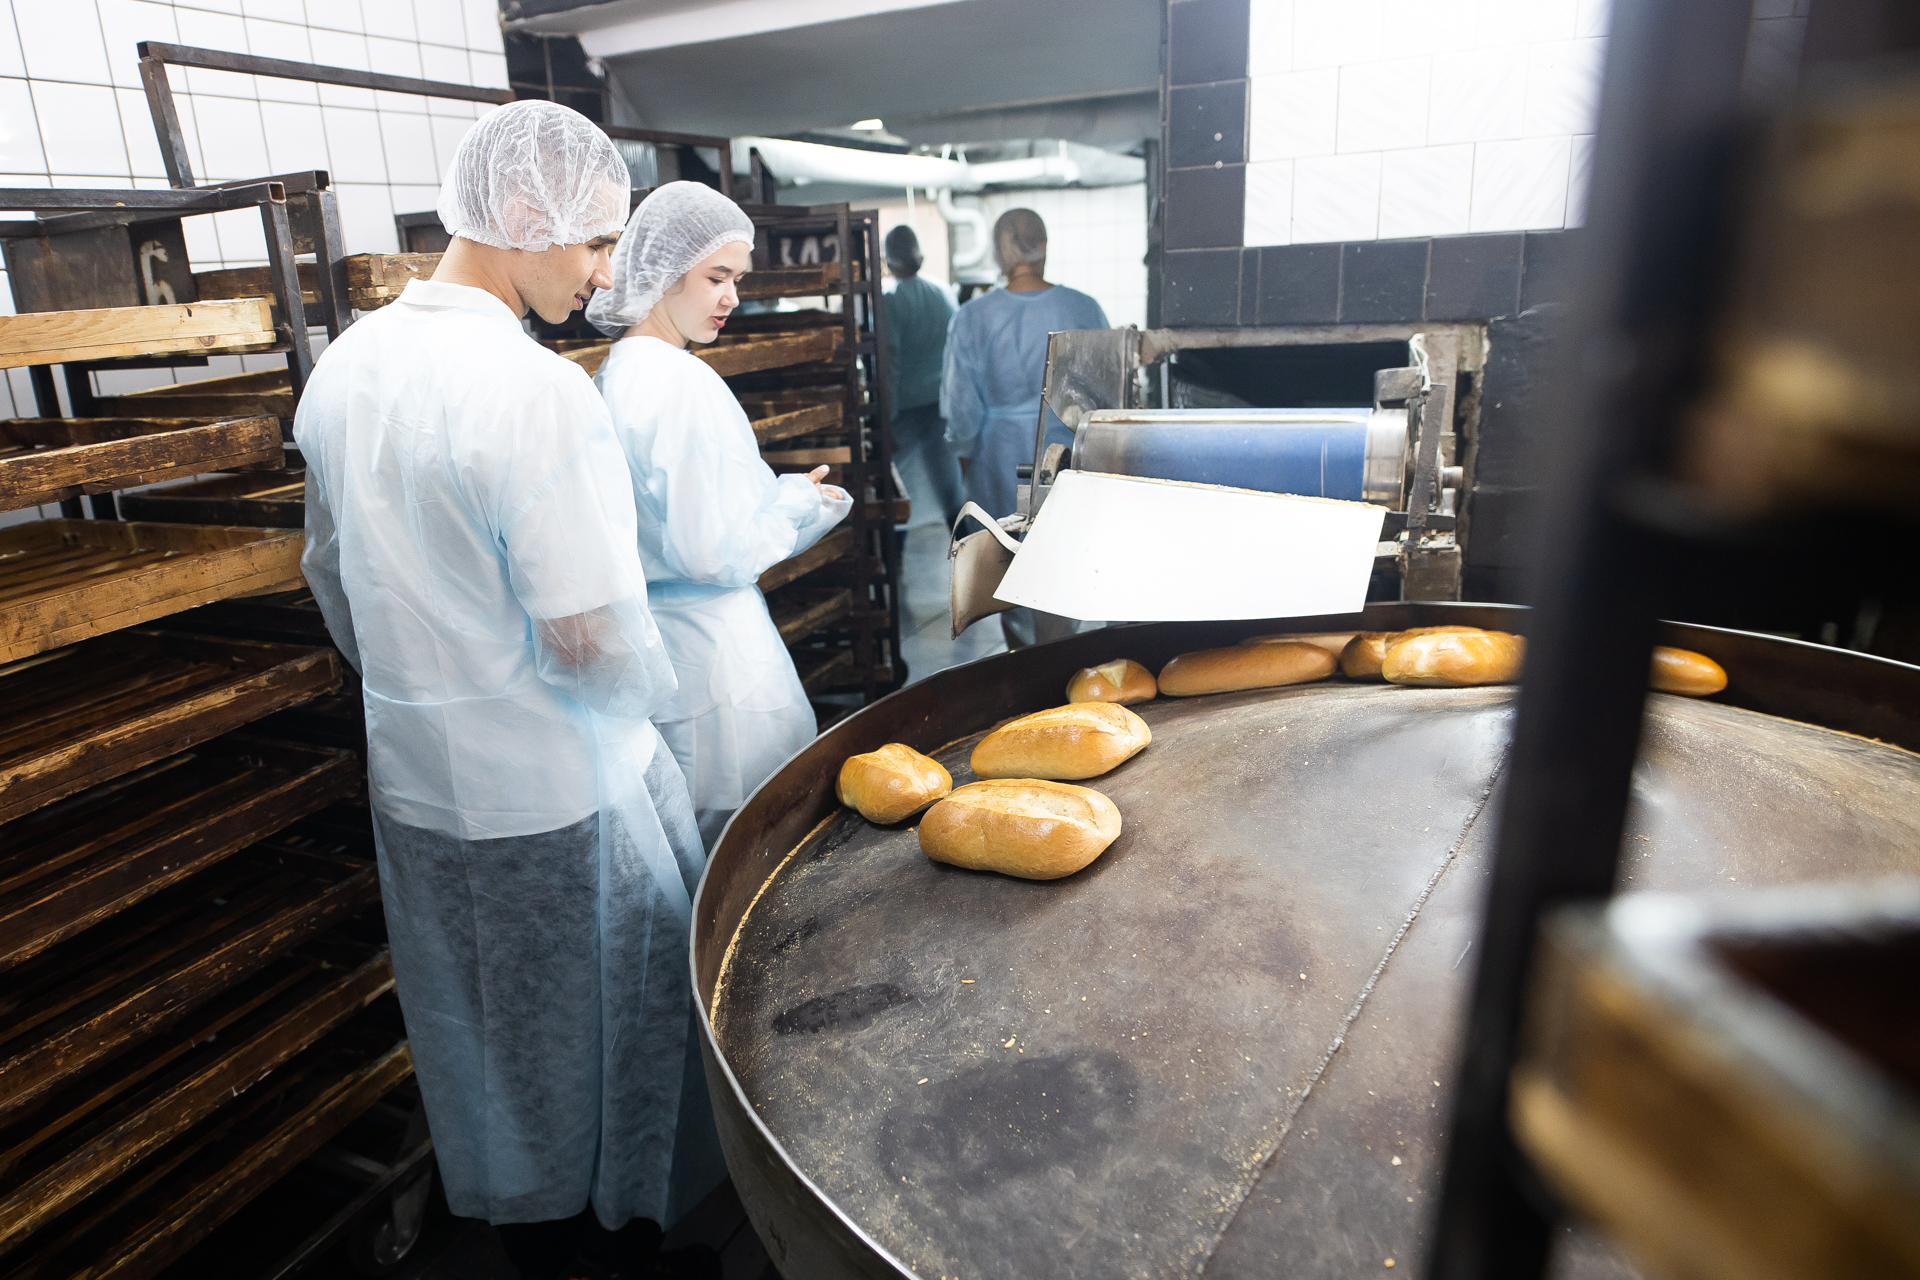 Русские традиции. Как пекут хлеб на старейшем заводе региона